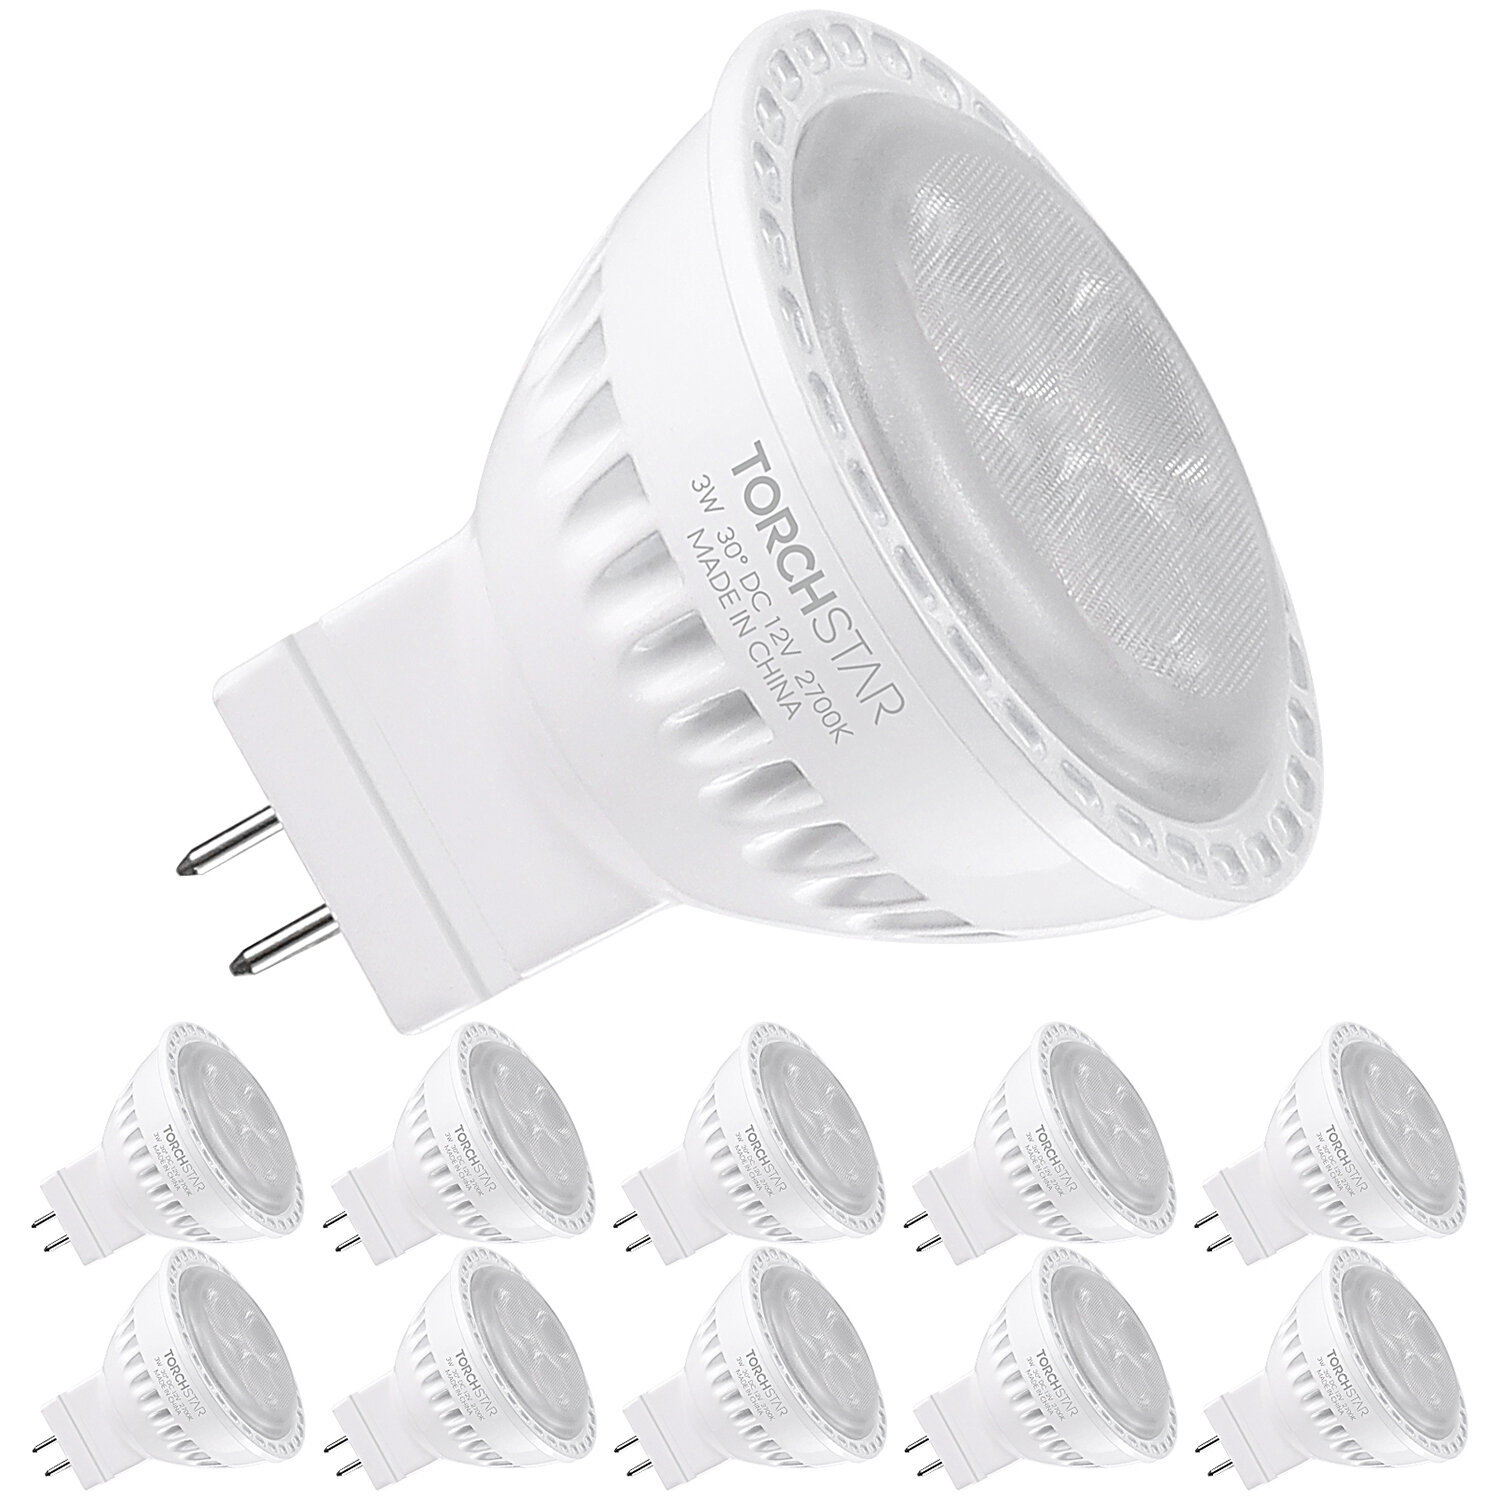 Mini Small GU10 2W LED MR11 Halogen Replacement Light Bulb 35mm Warm Cool White 